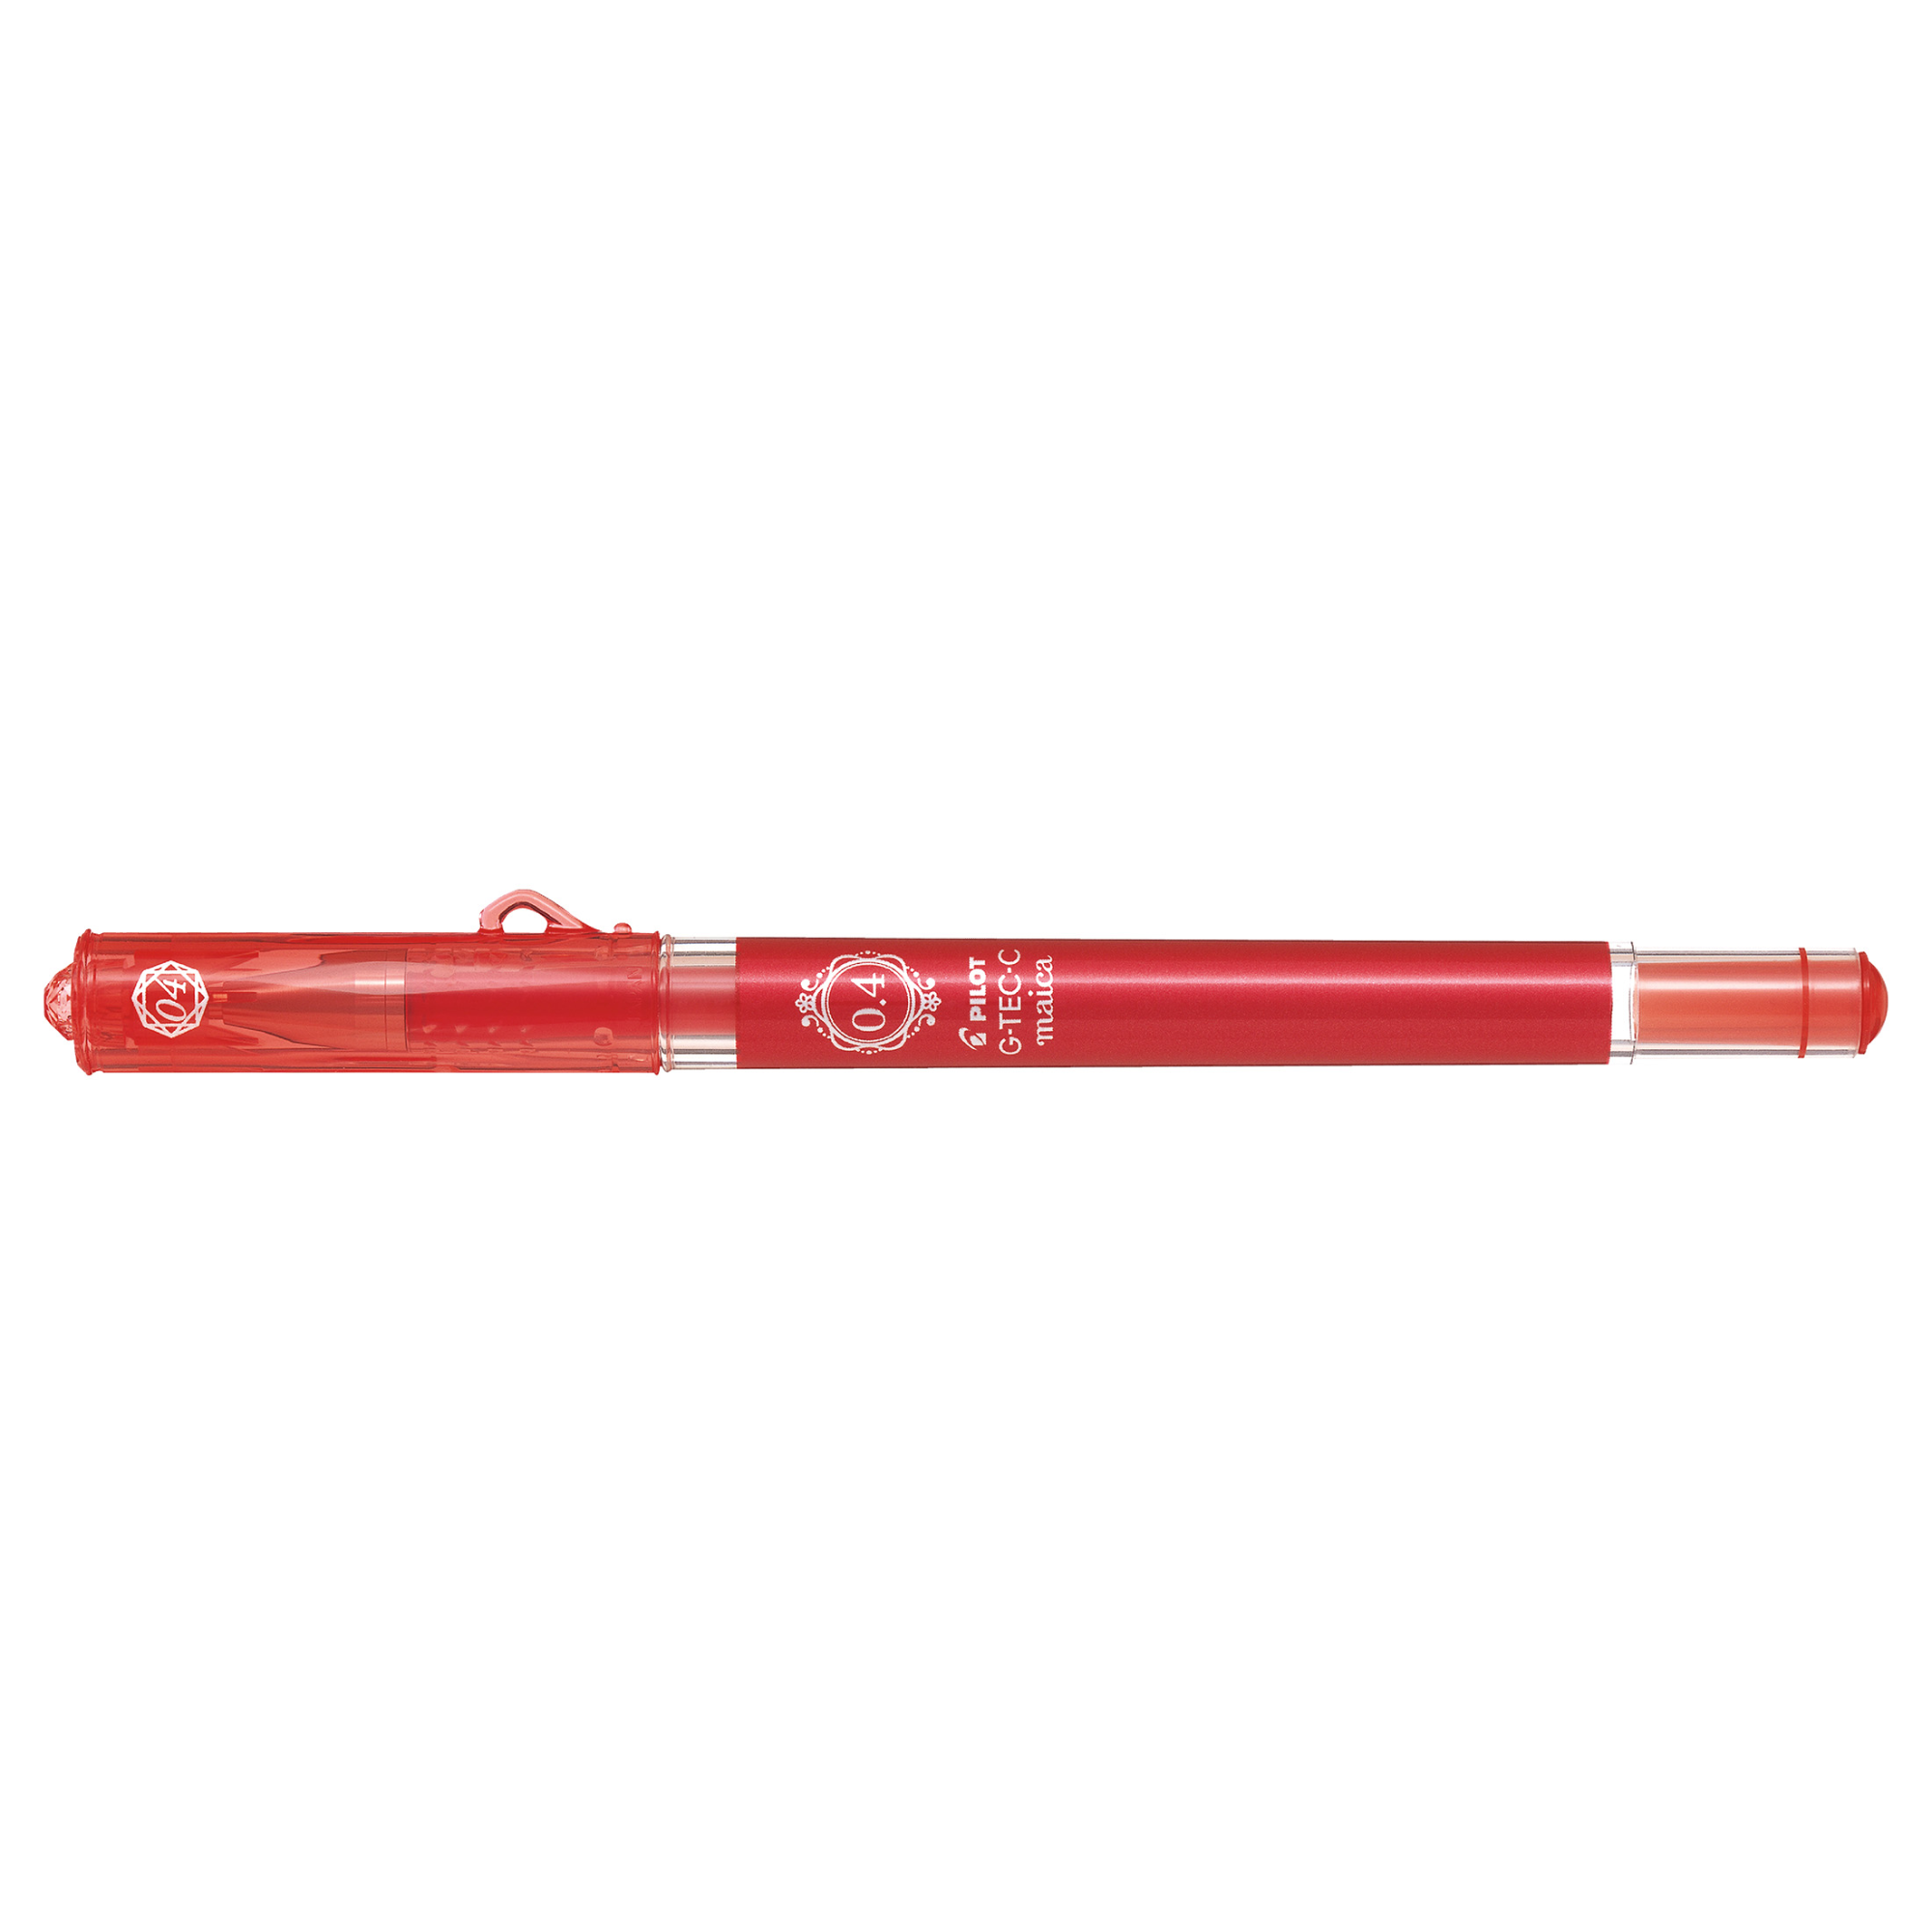 Maica G-TEC-C, Red, Ultra fine gel ink roller * Pilot